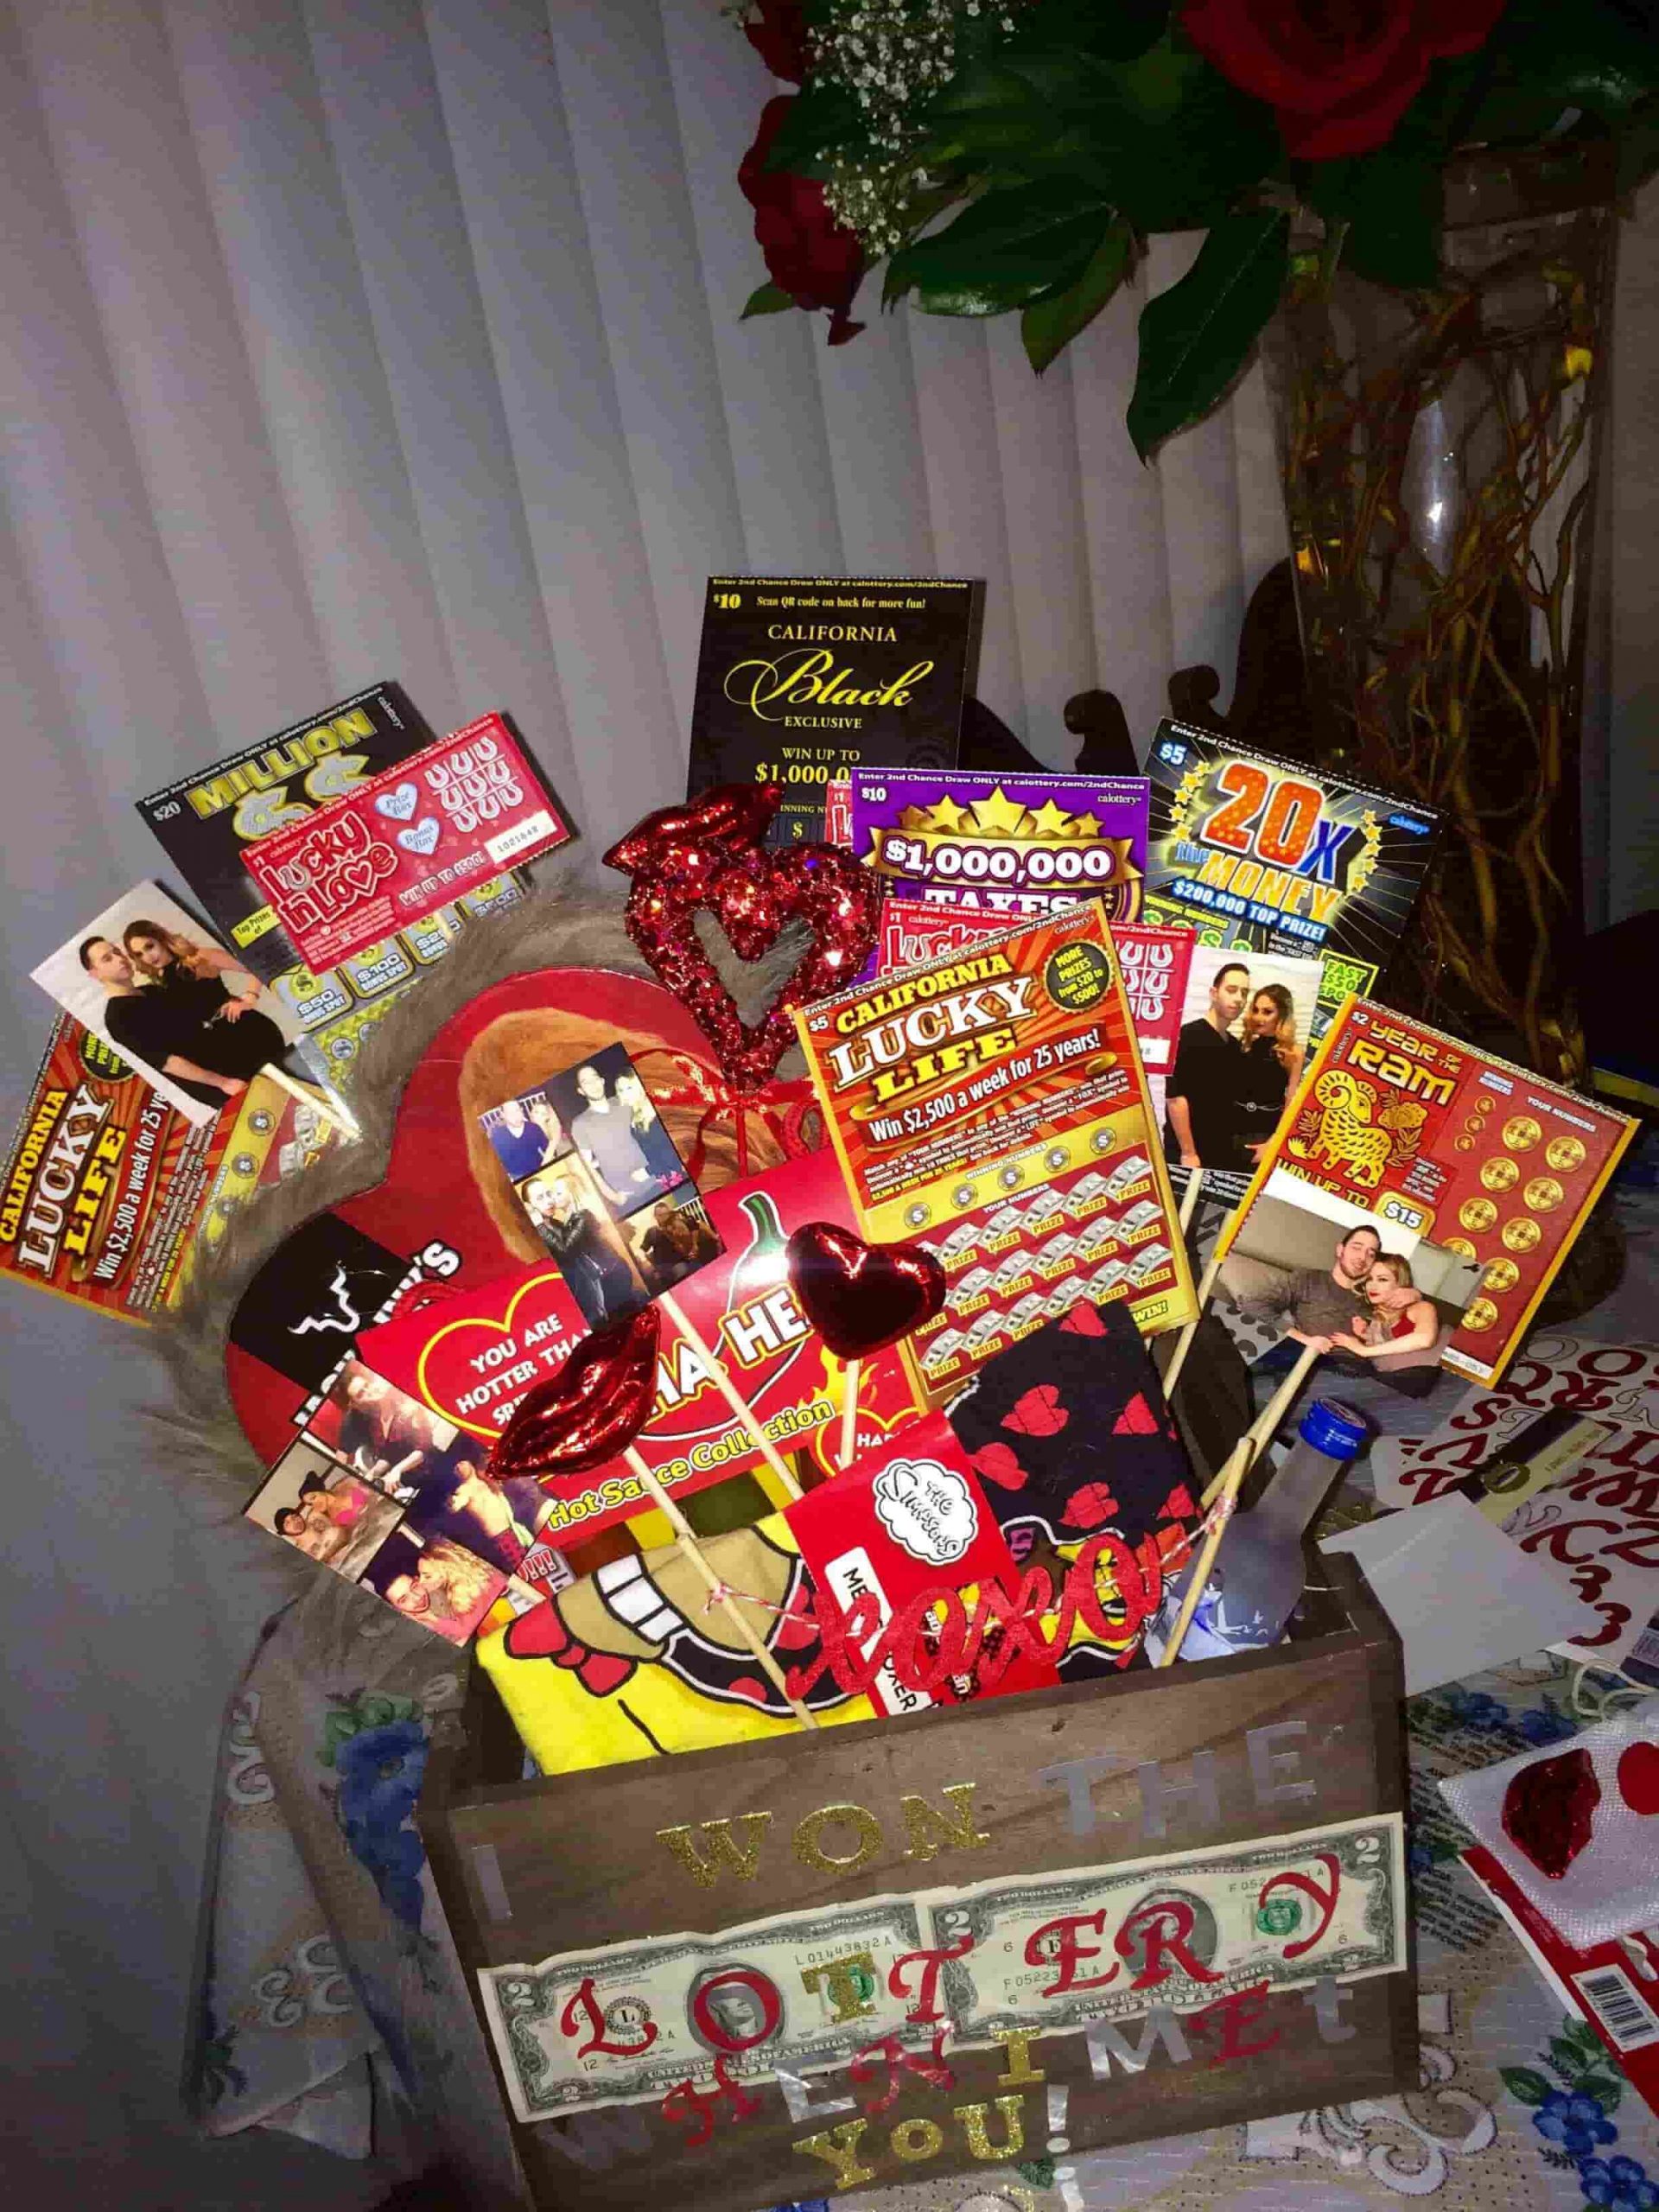 Valentine Gift Box Ideas
 Best Valentine s Day Gift Baskets Boxes & Gift Sets Ideas